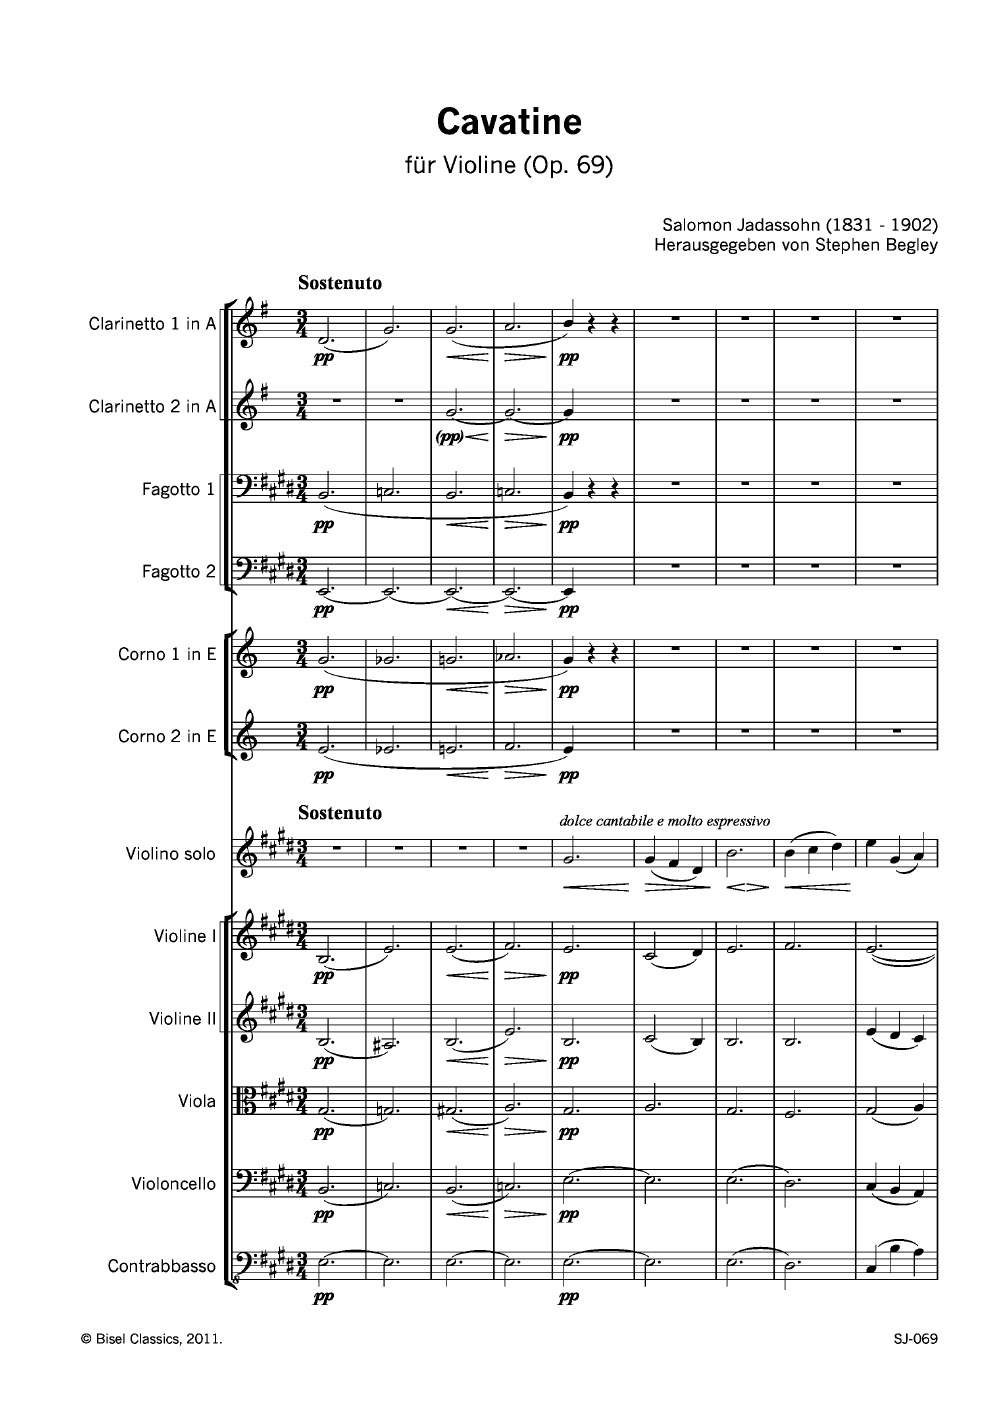 Cavatine fur Violine Op. 69 Score